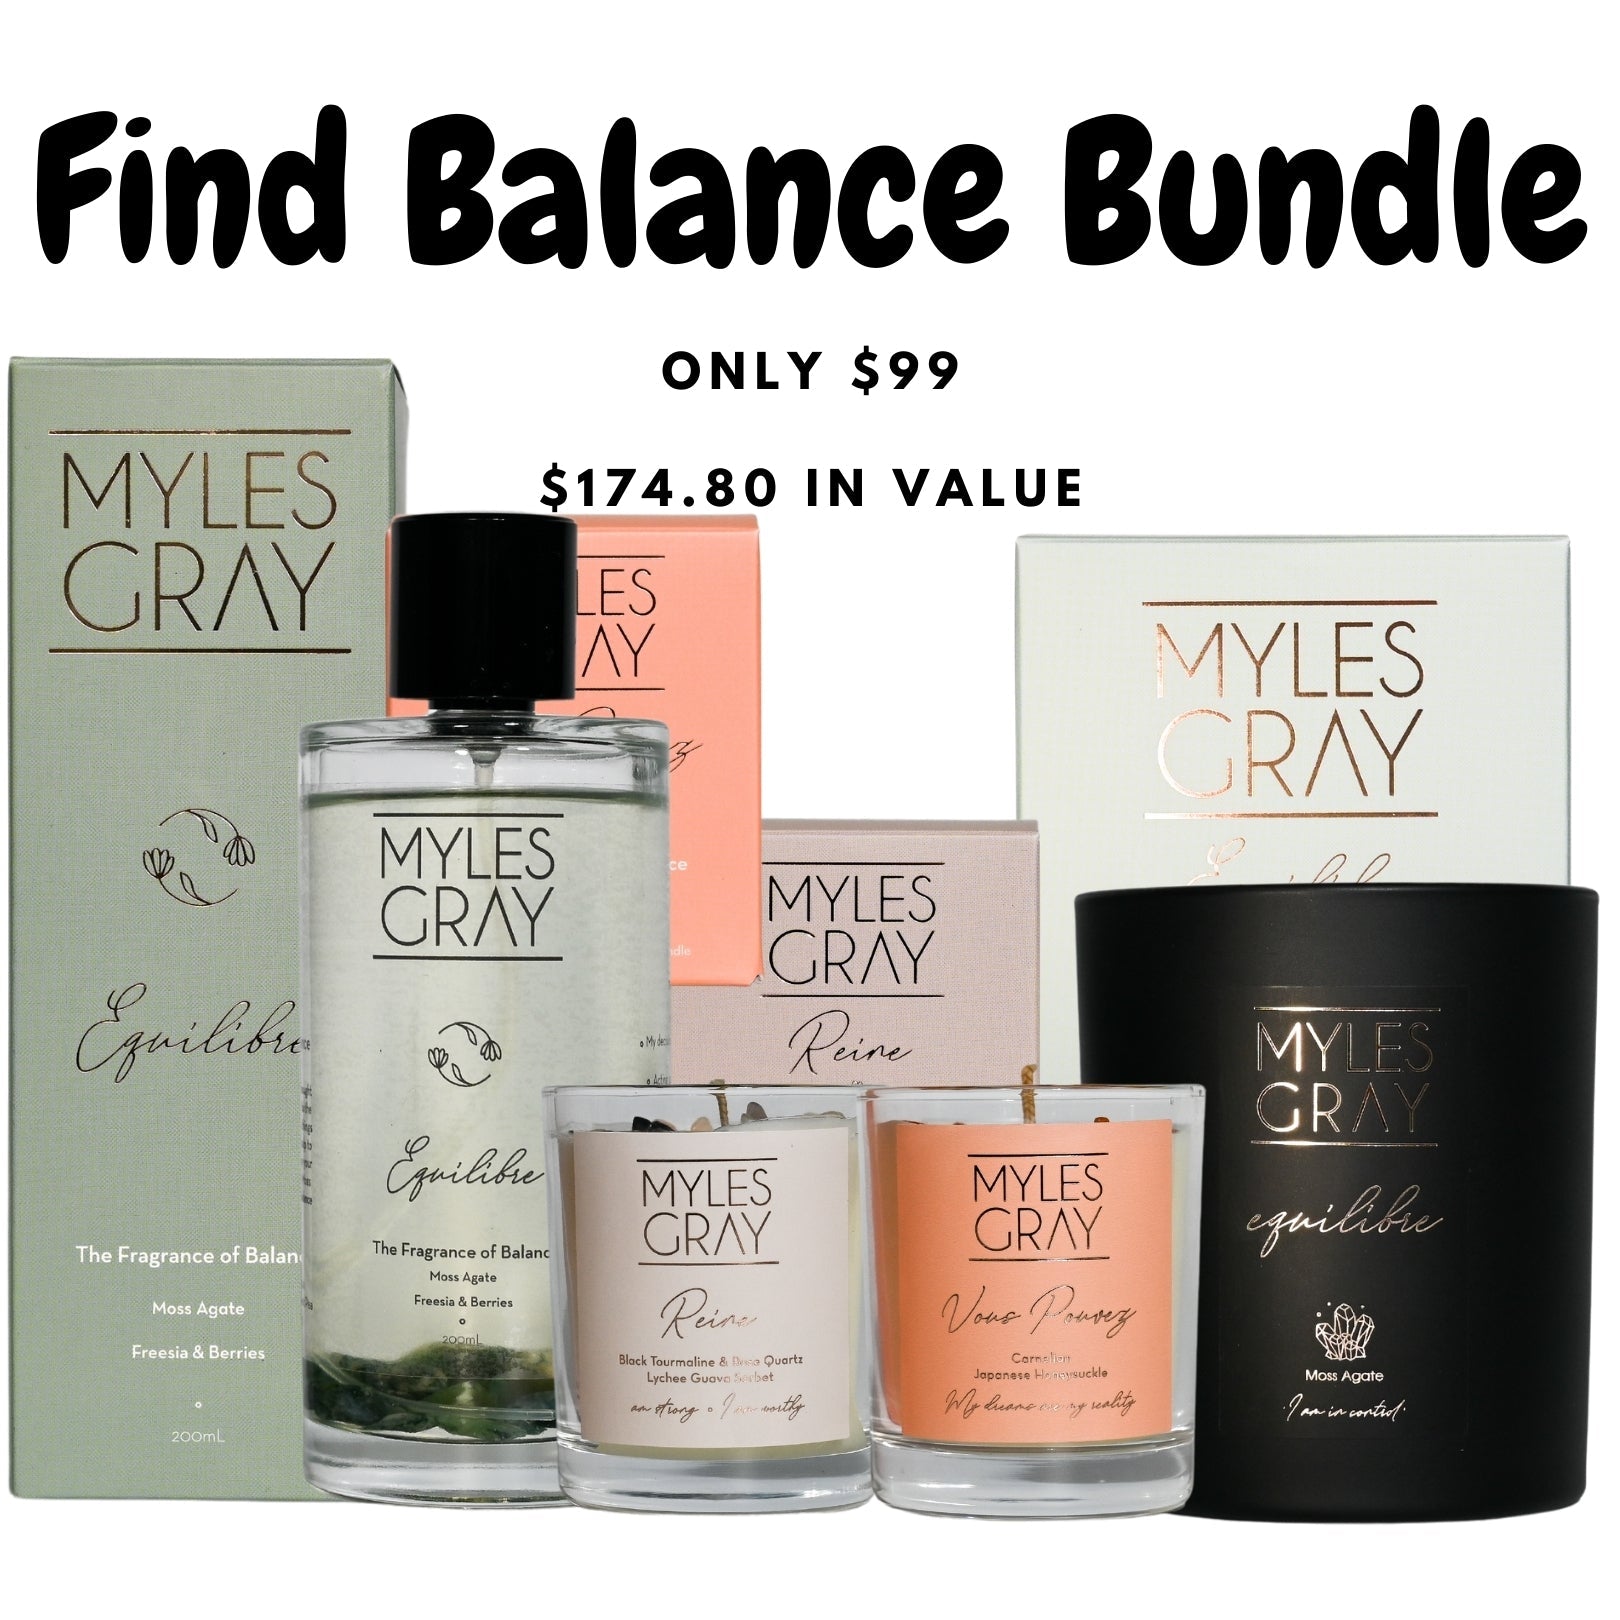 Find Balance Bundle - Myles Gray